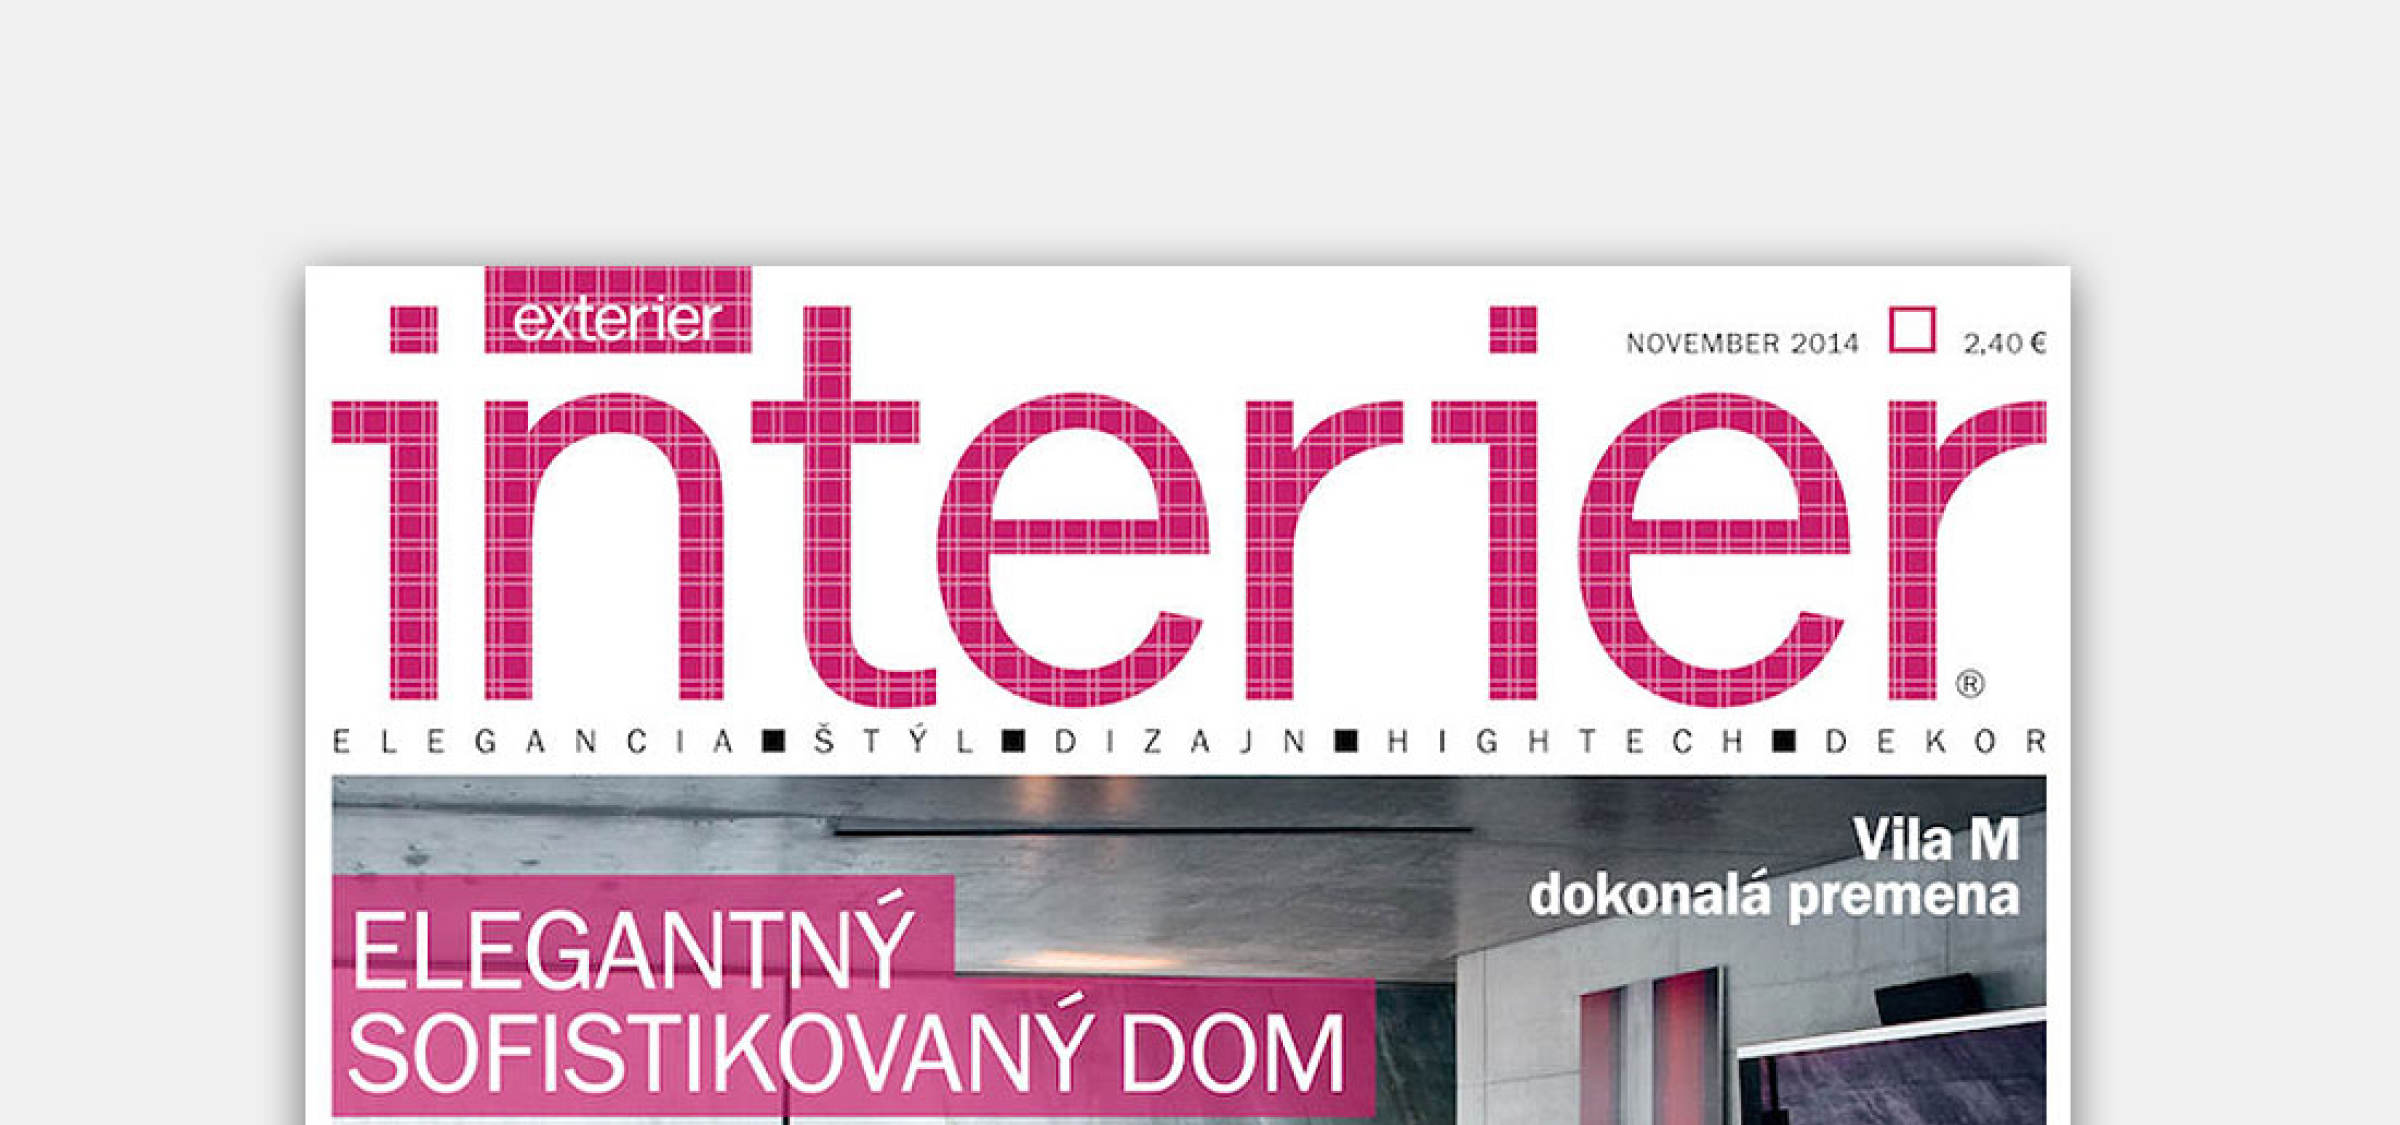 Vila M in new issue of Exterier / Interier | News | Atrium Architekti